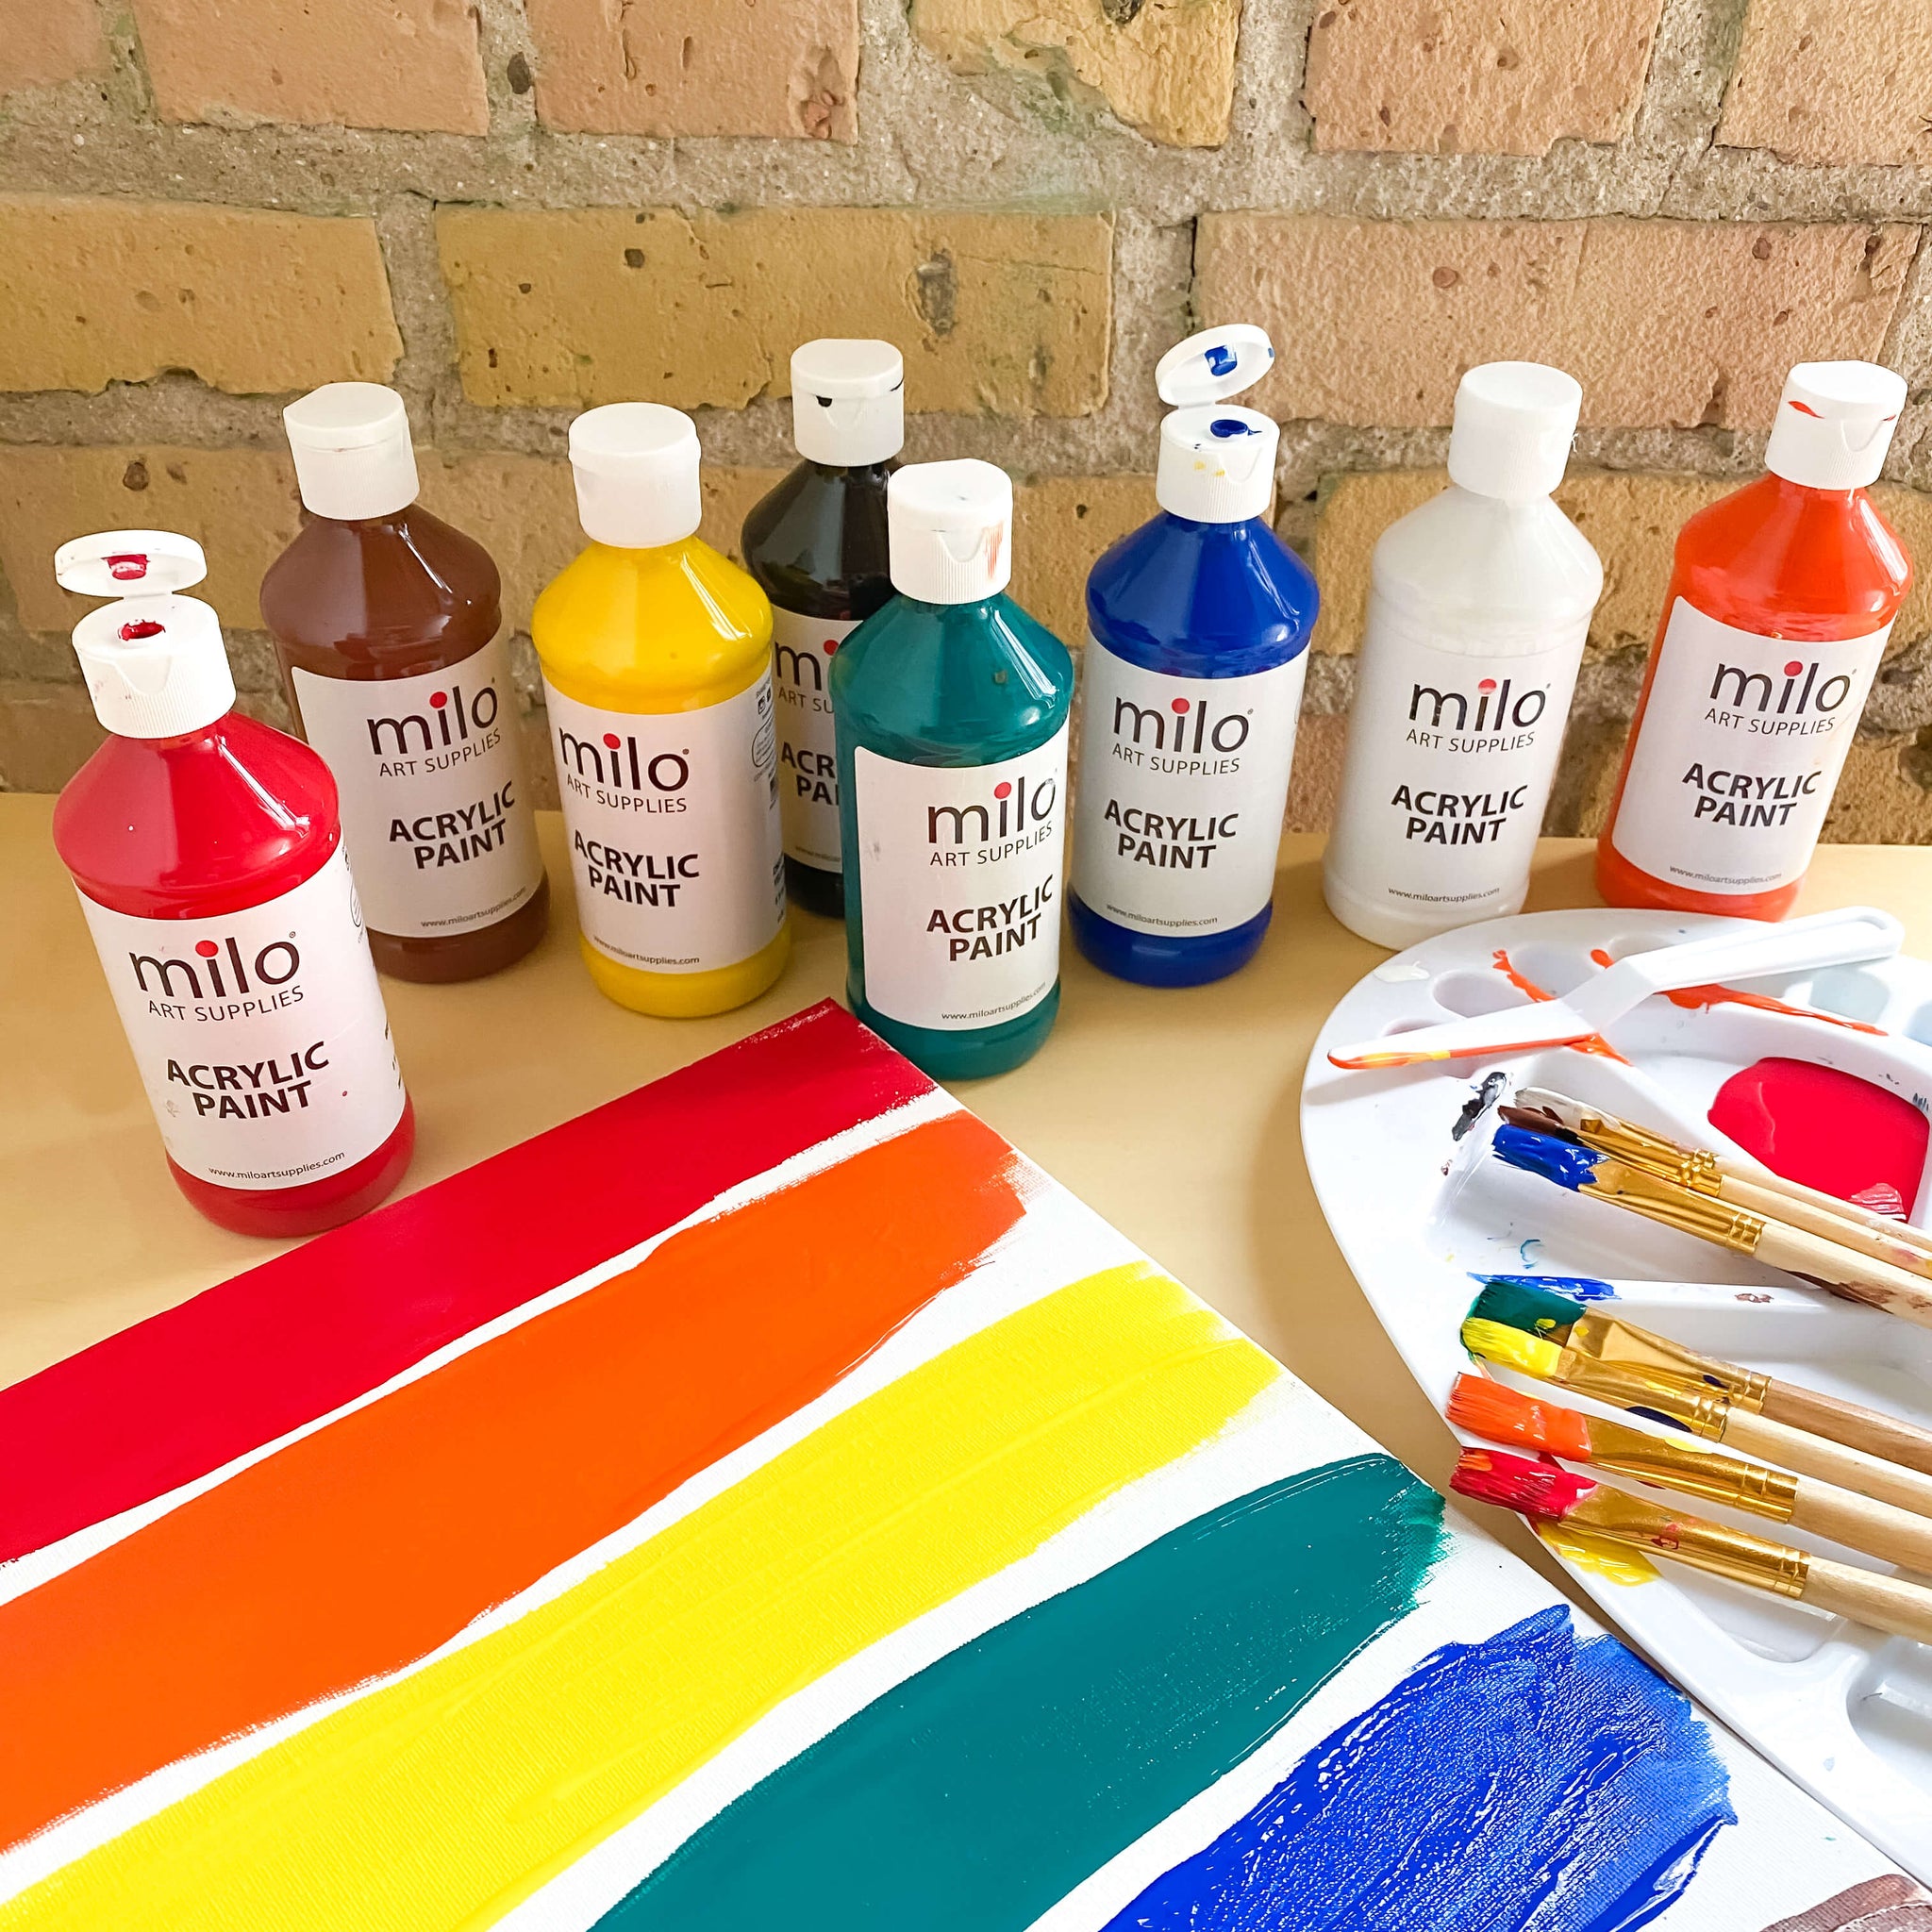 Milo Acrylic Paint 2 oz Bottles Set of 6 – Milo Art Supplies